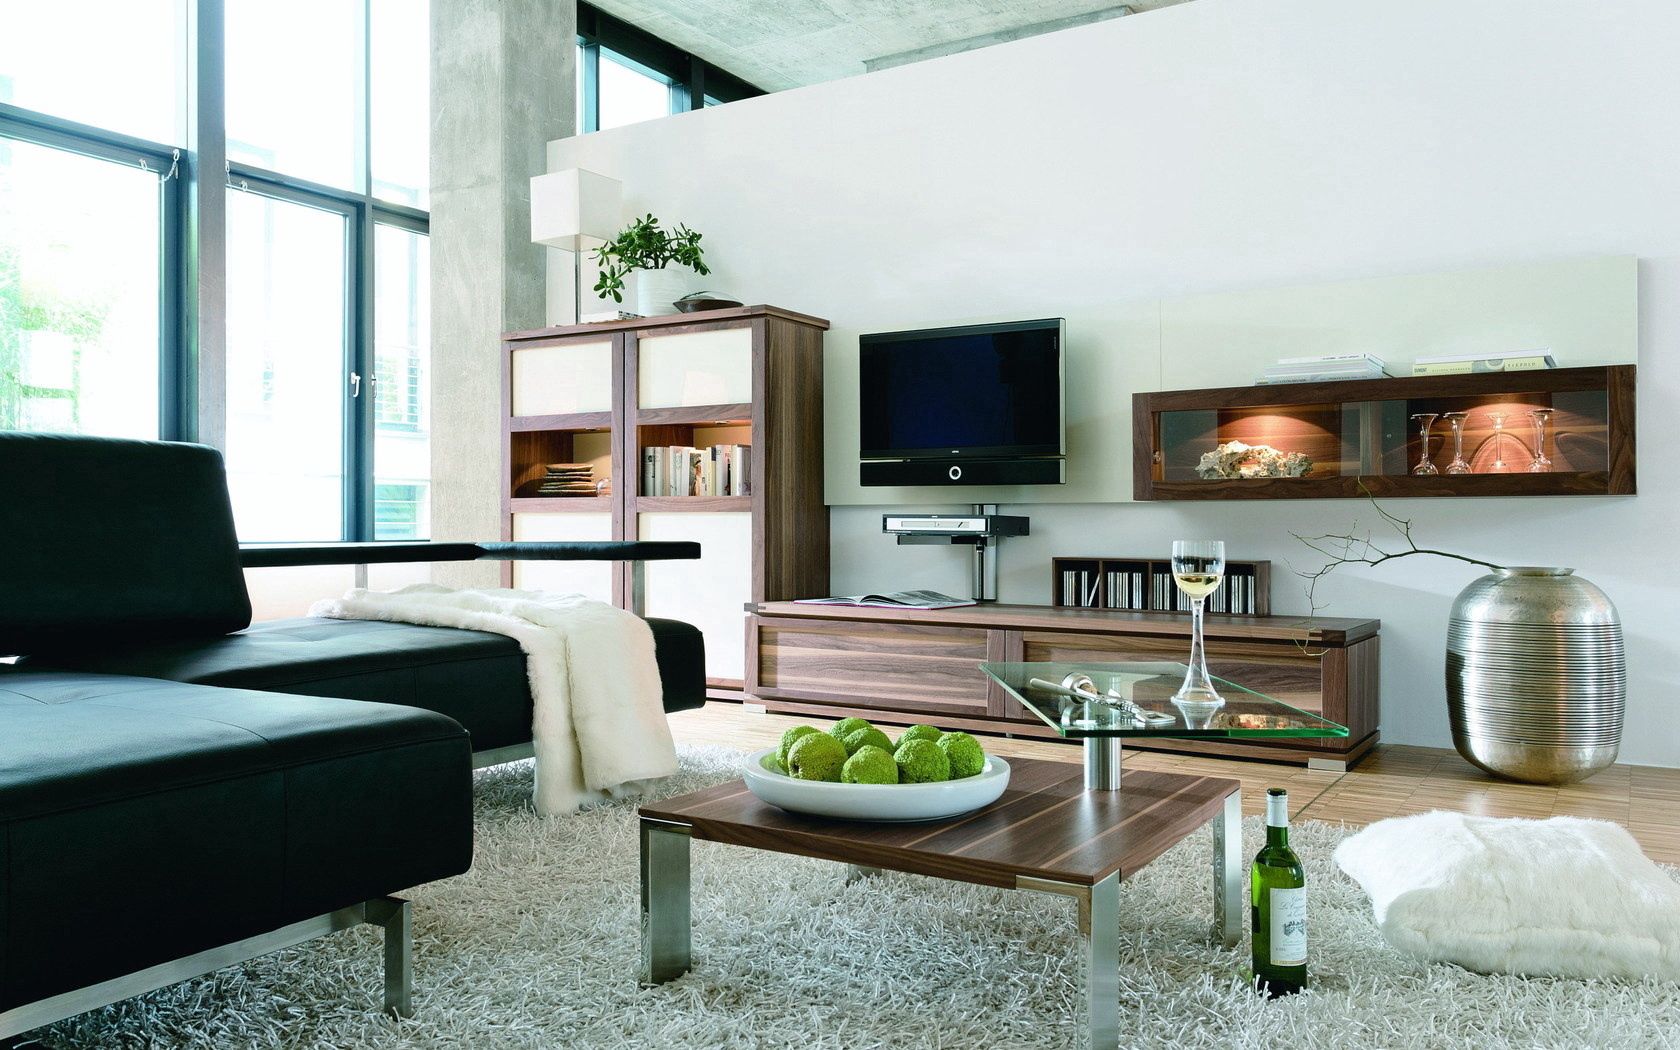 android interior, miscellanea, miscellaneous, furniture, coziness, comfort, living room, carpet